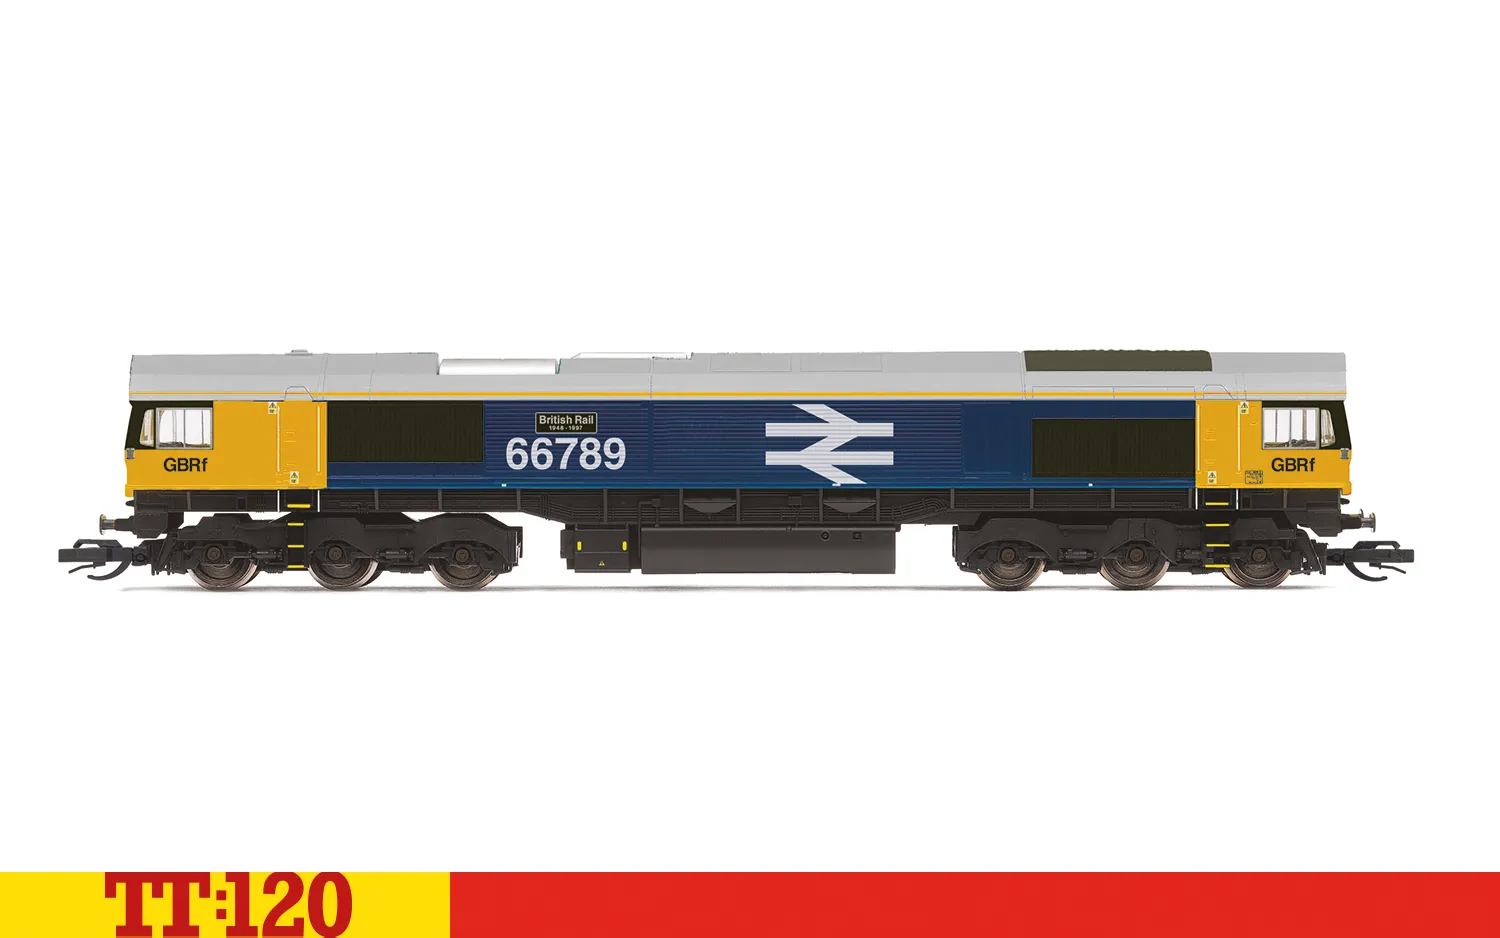 GBRf, Klasse 66, Co-Co, 66789, 'British Rail 1948-1997'- Ep. 11